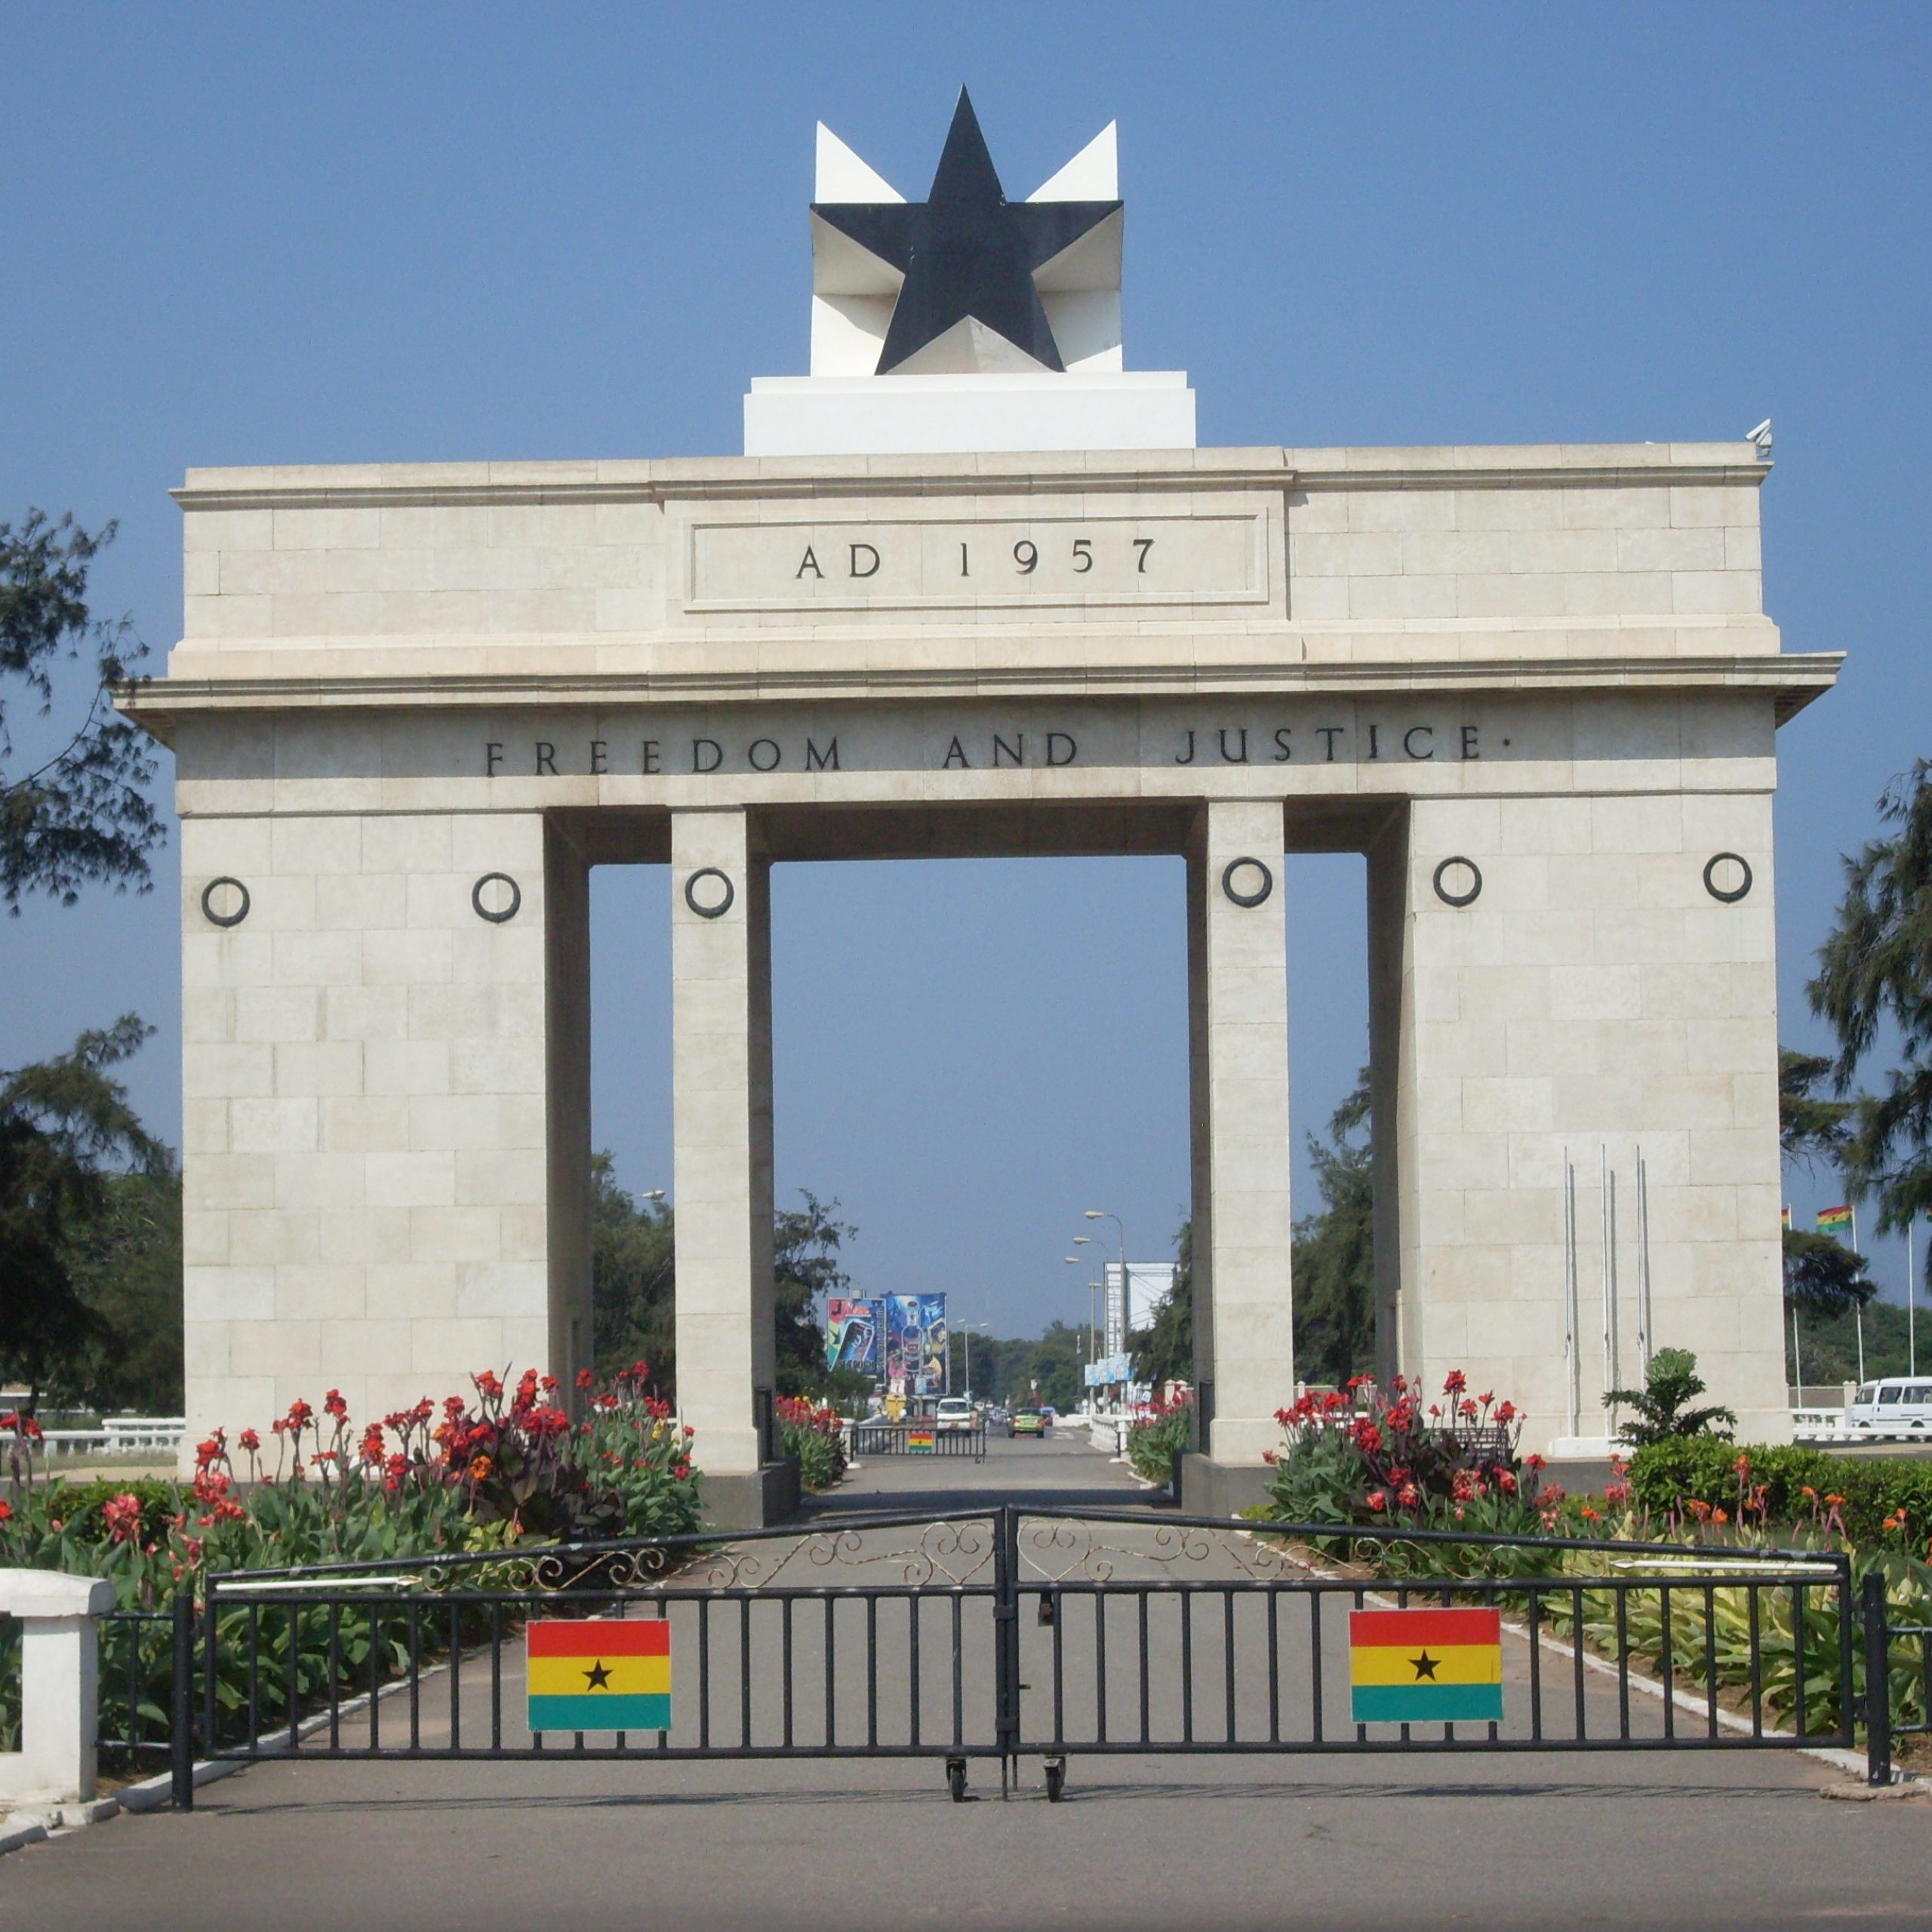 DAY 1 - ACCRA, GHANA